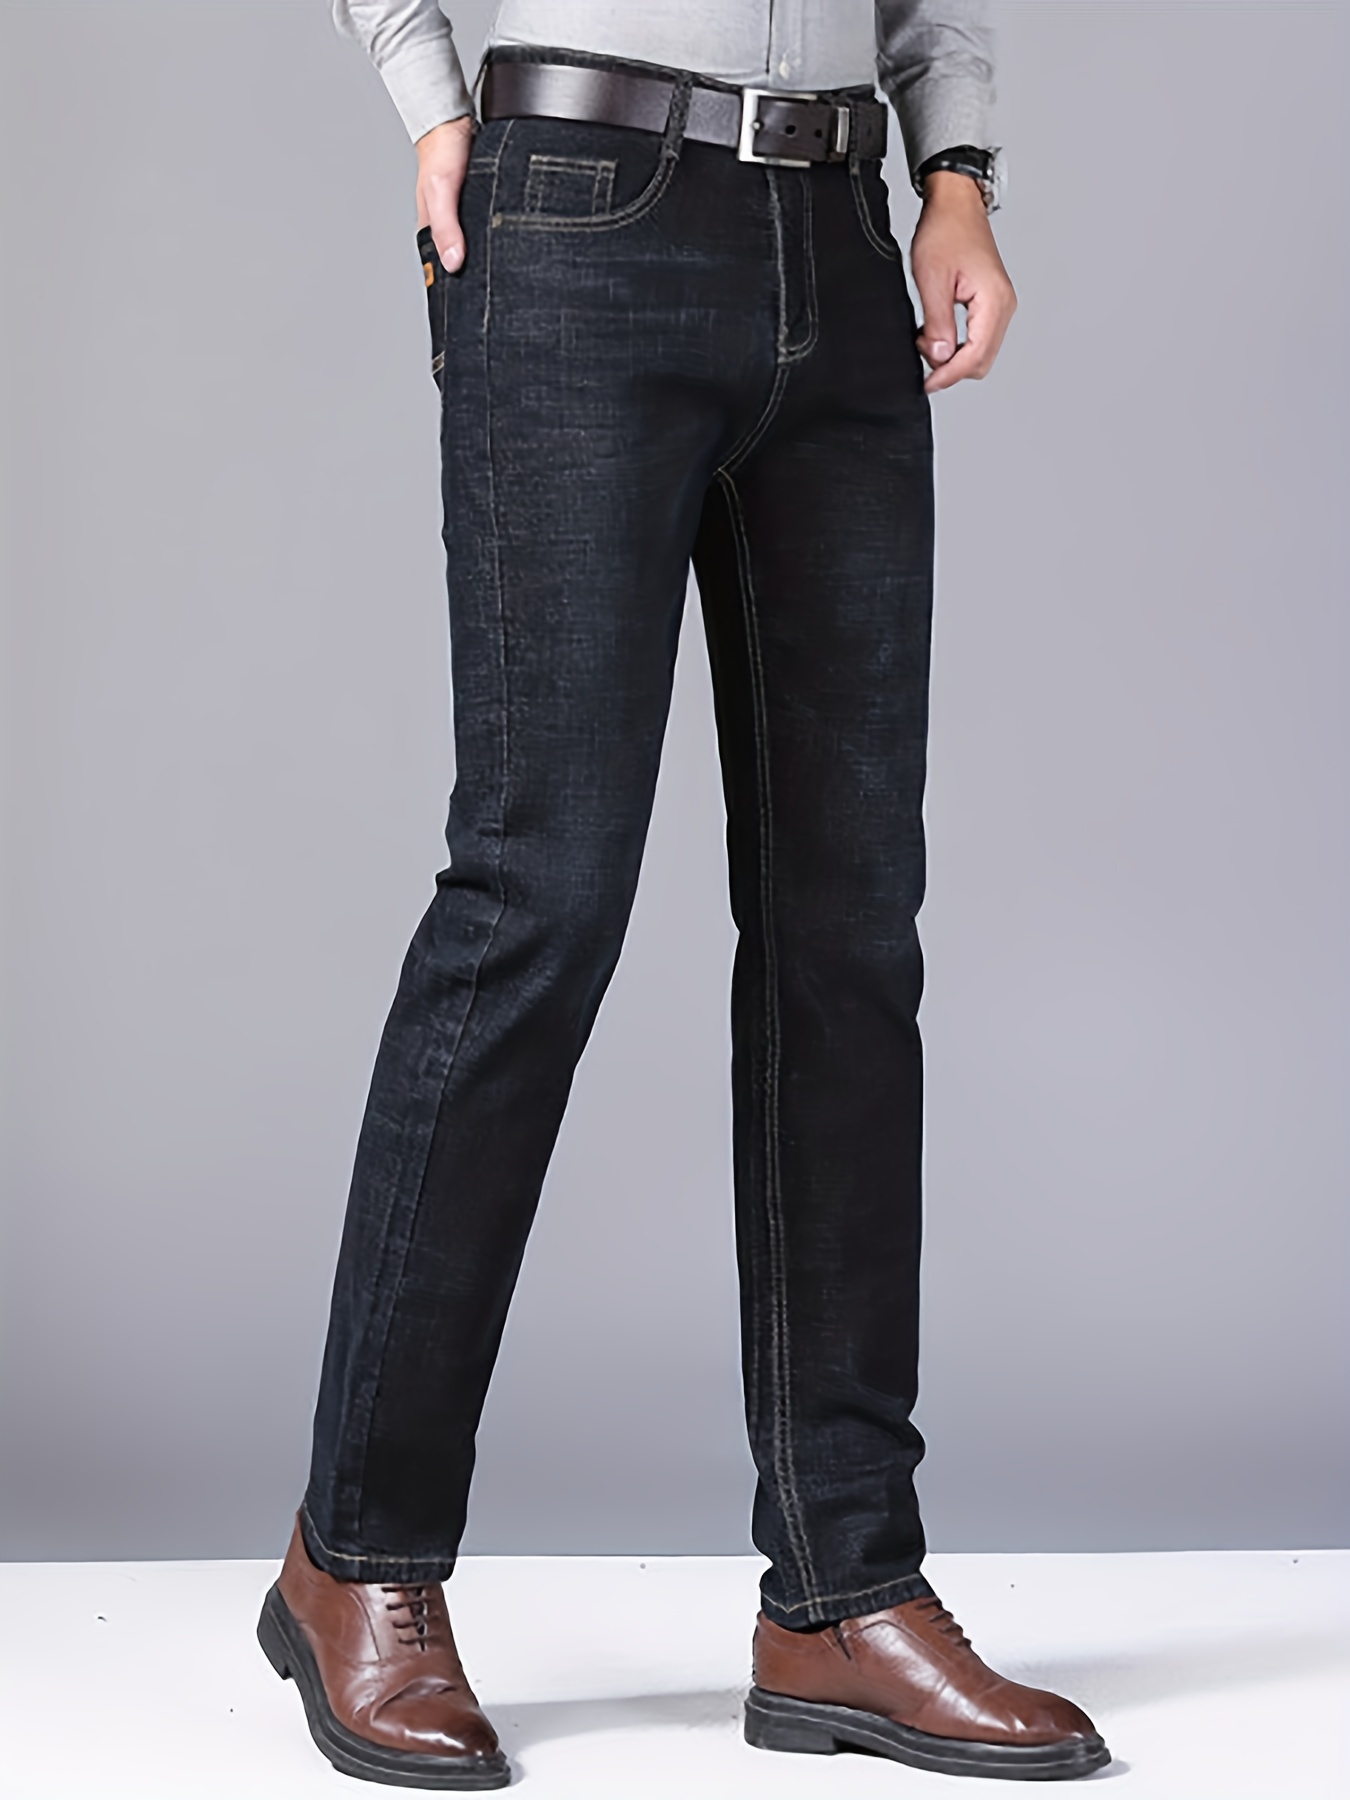 classic design semiformal jeans mens casual stretch denim pants for business